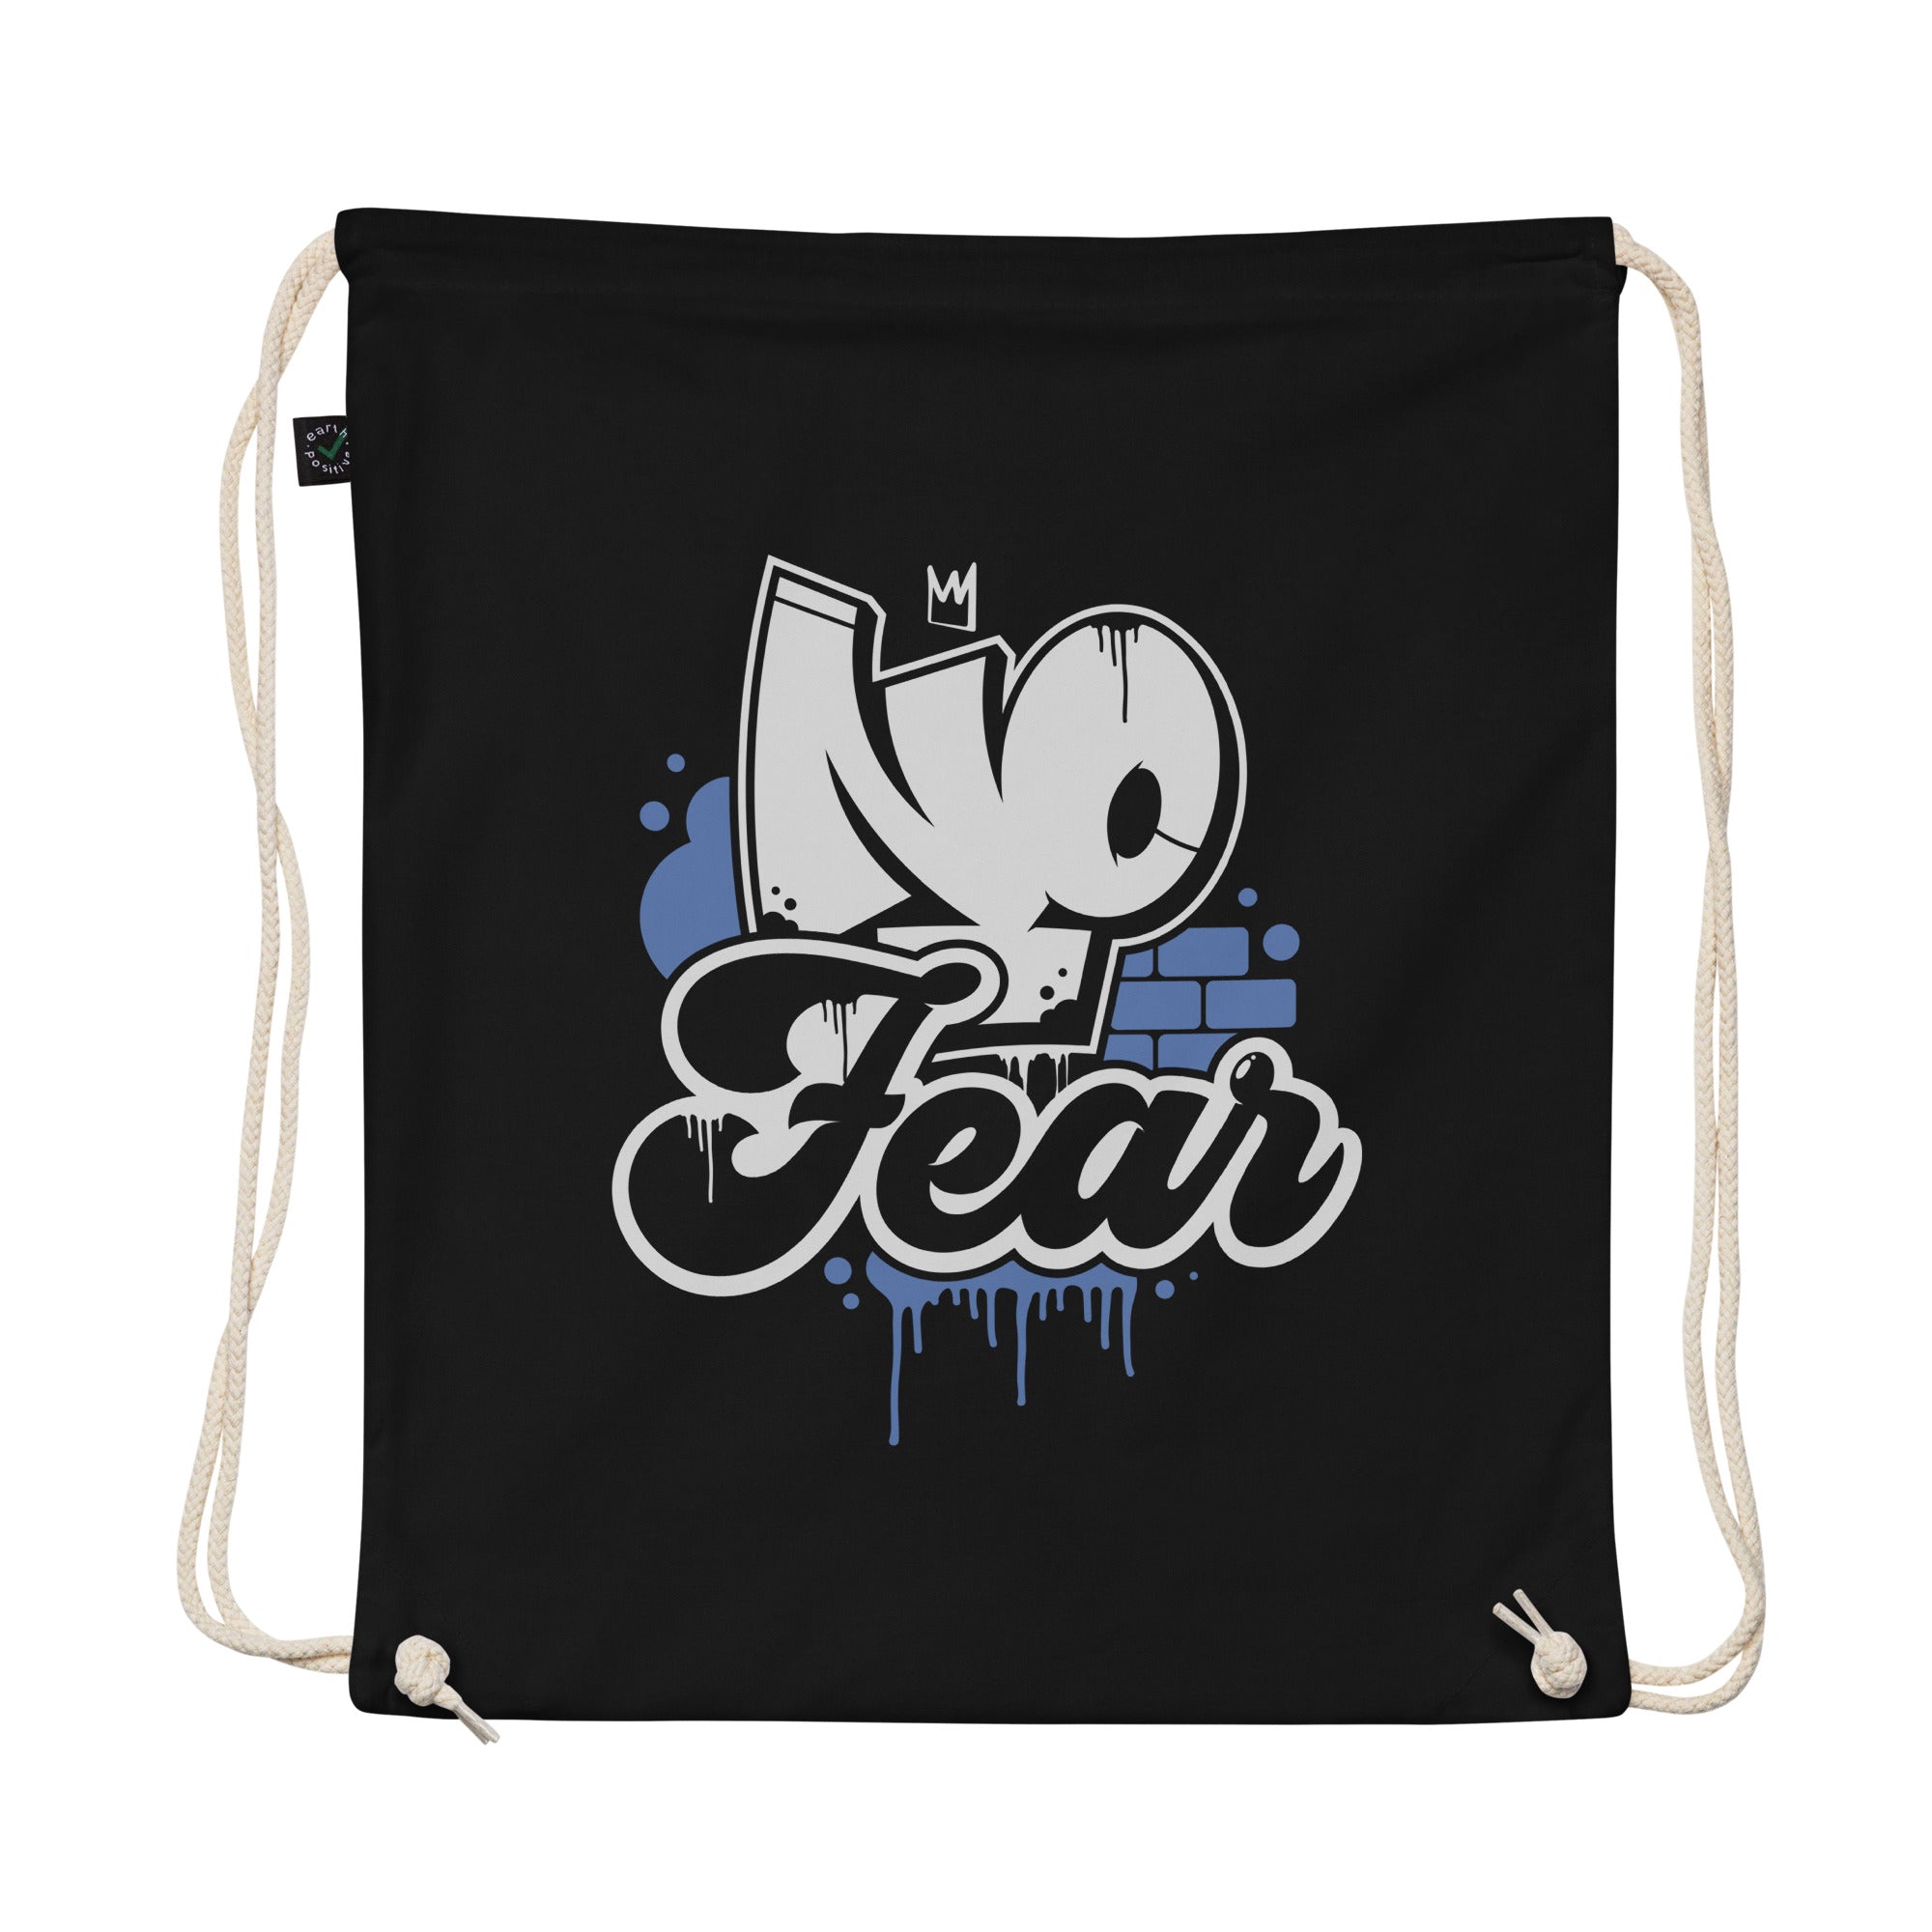 "No Fear" Organic cotton drawstring bag